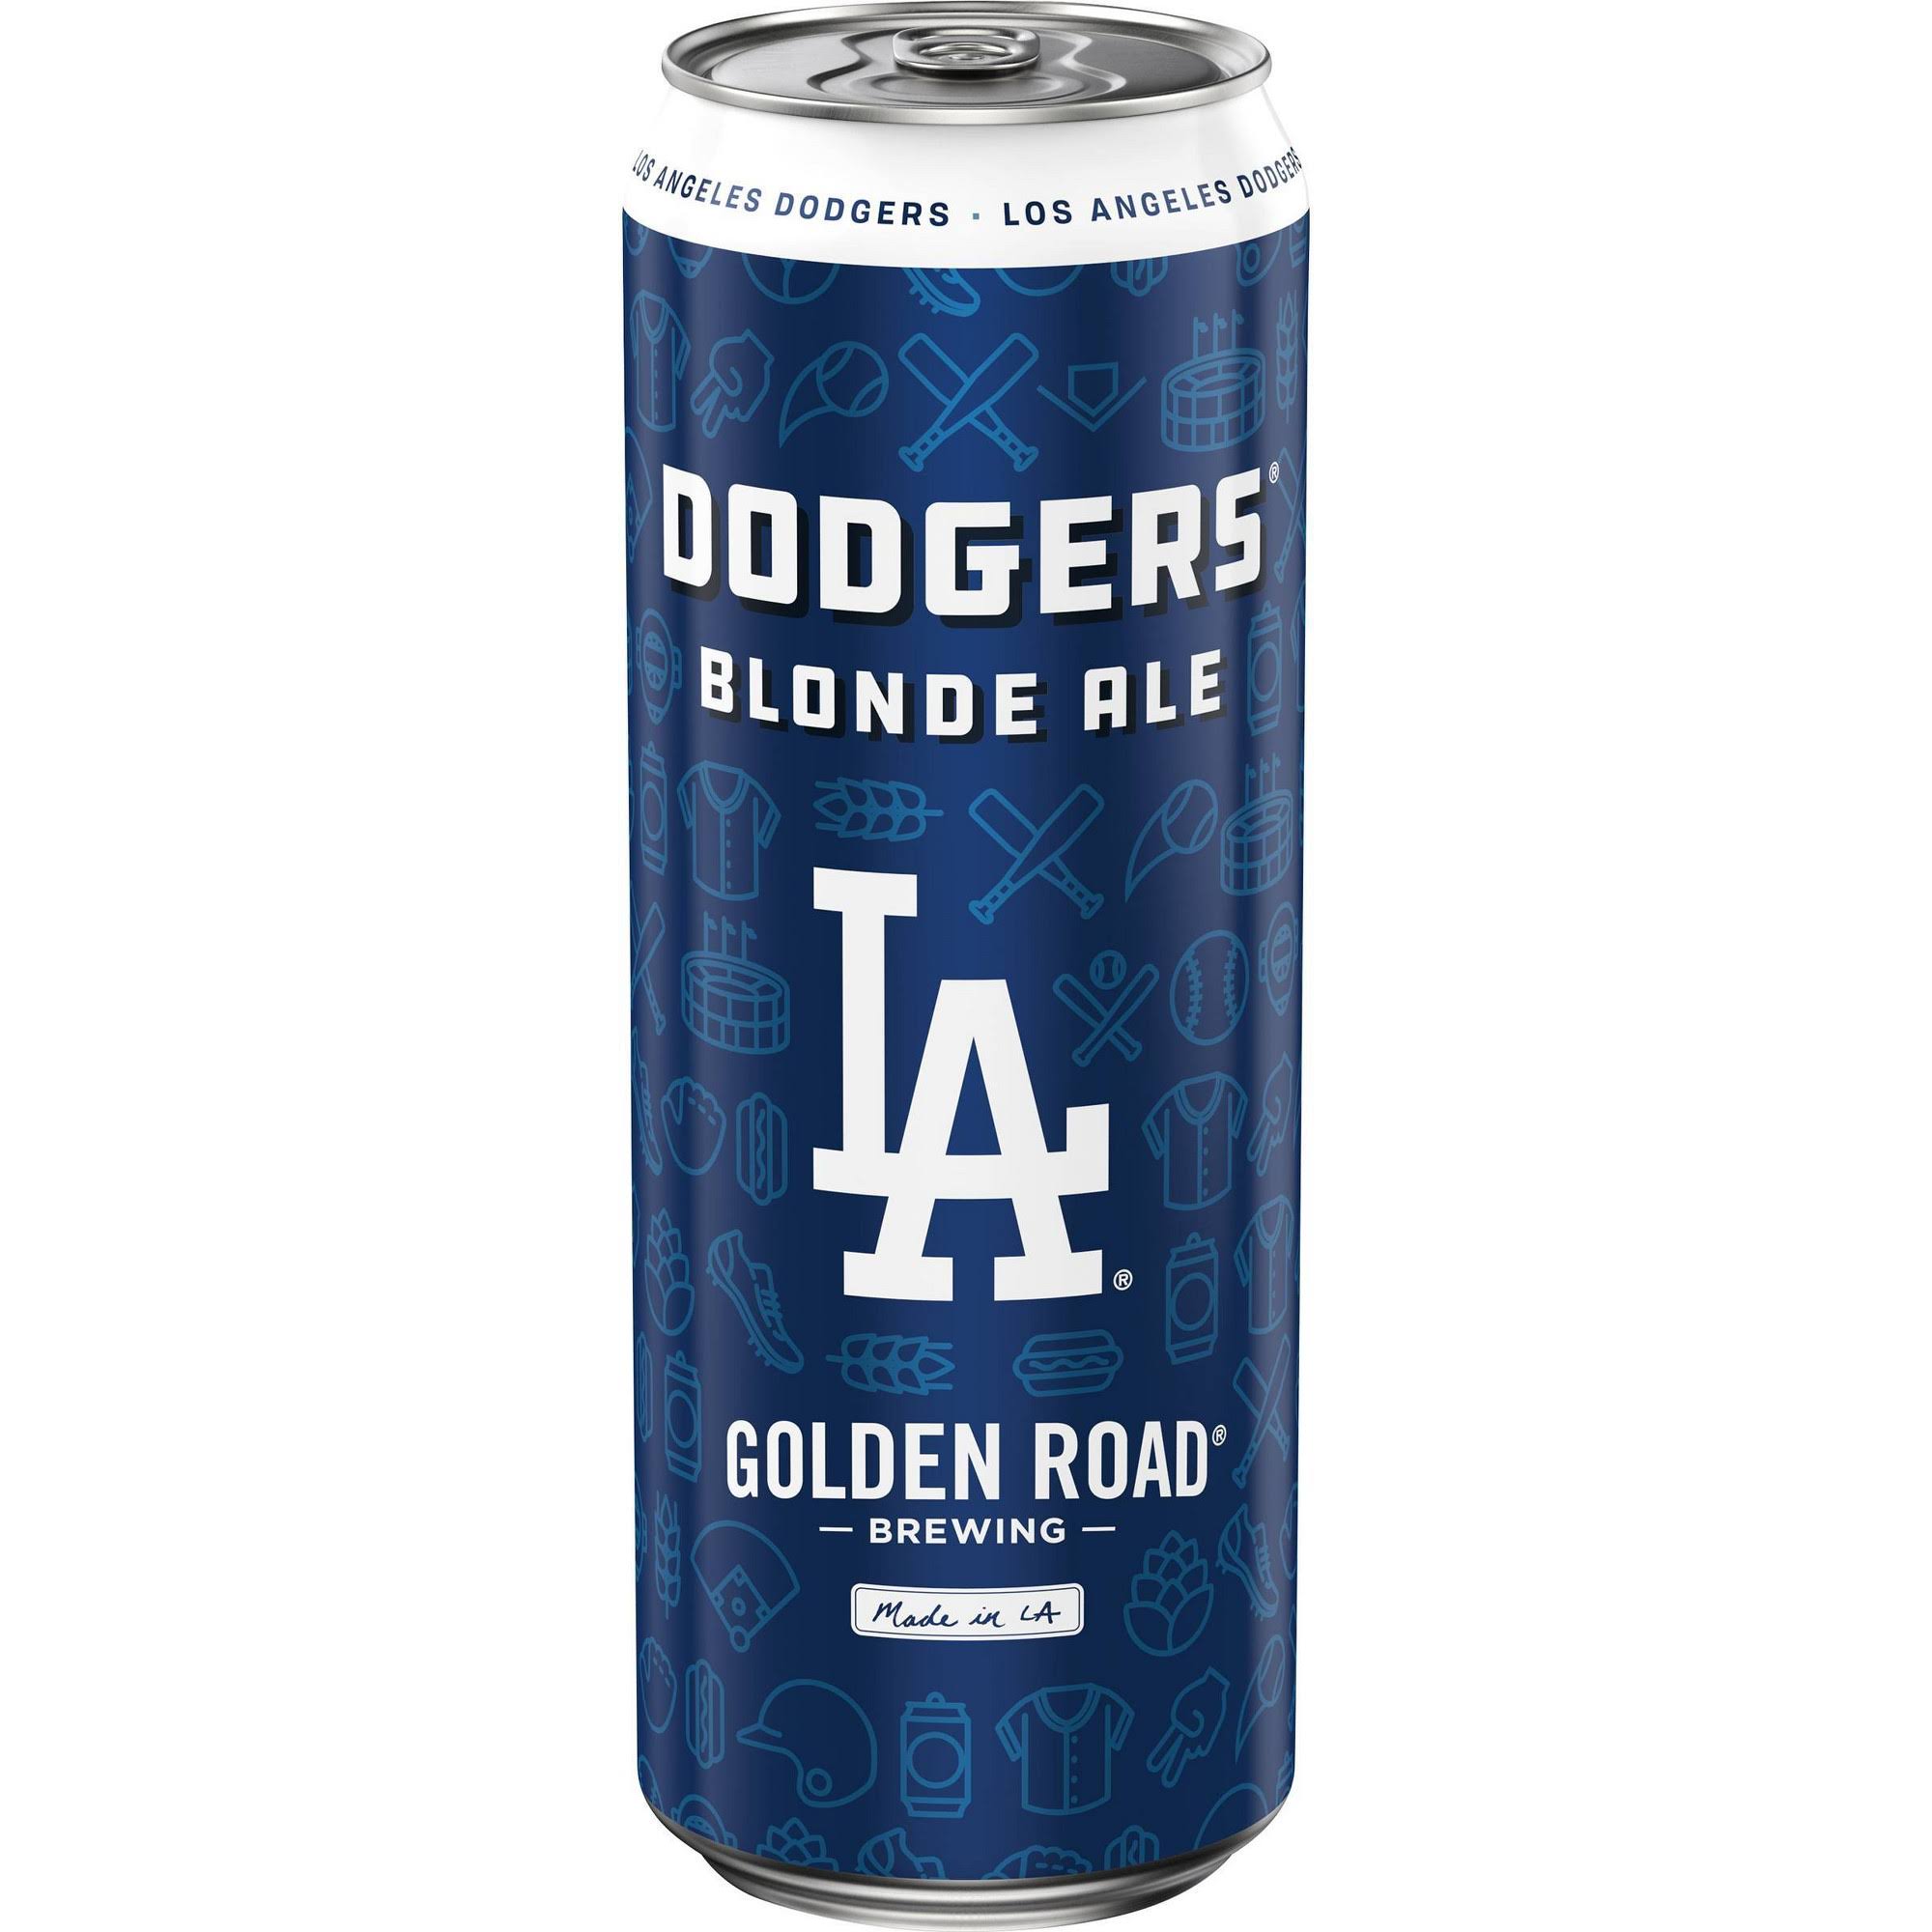 Golden Road Brewing Dodgers Blonde Ale Beer Can - 25 oz